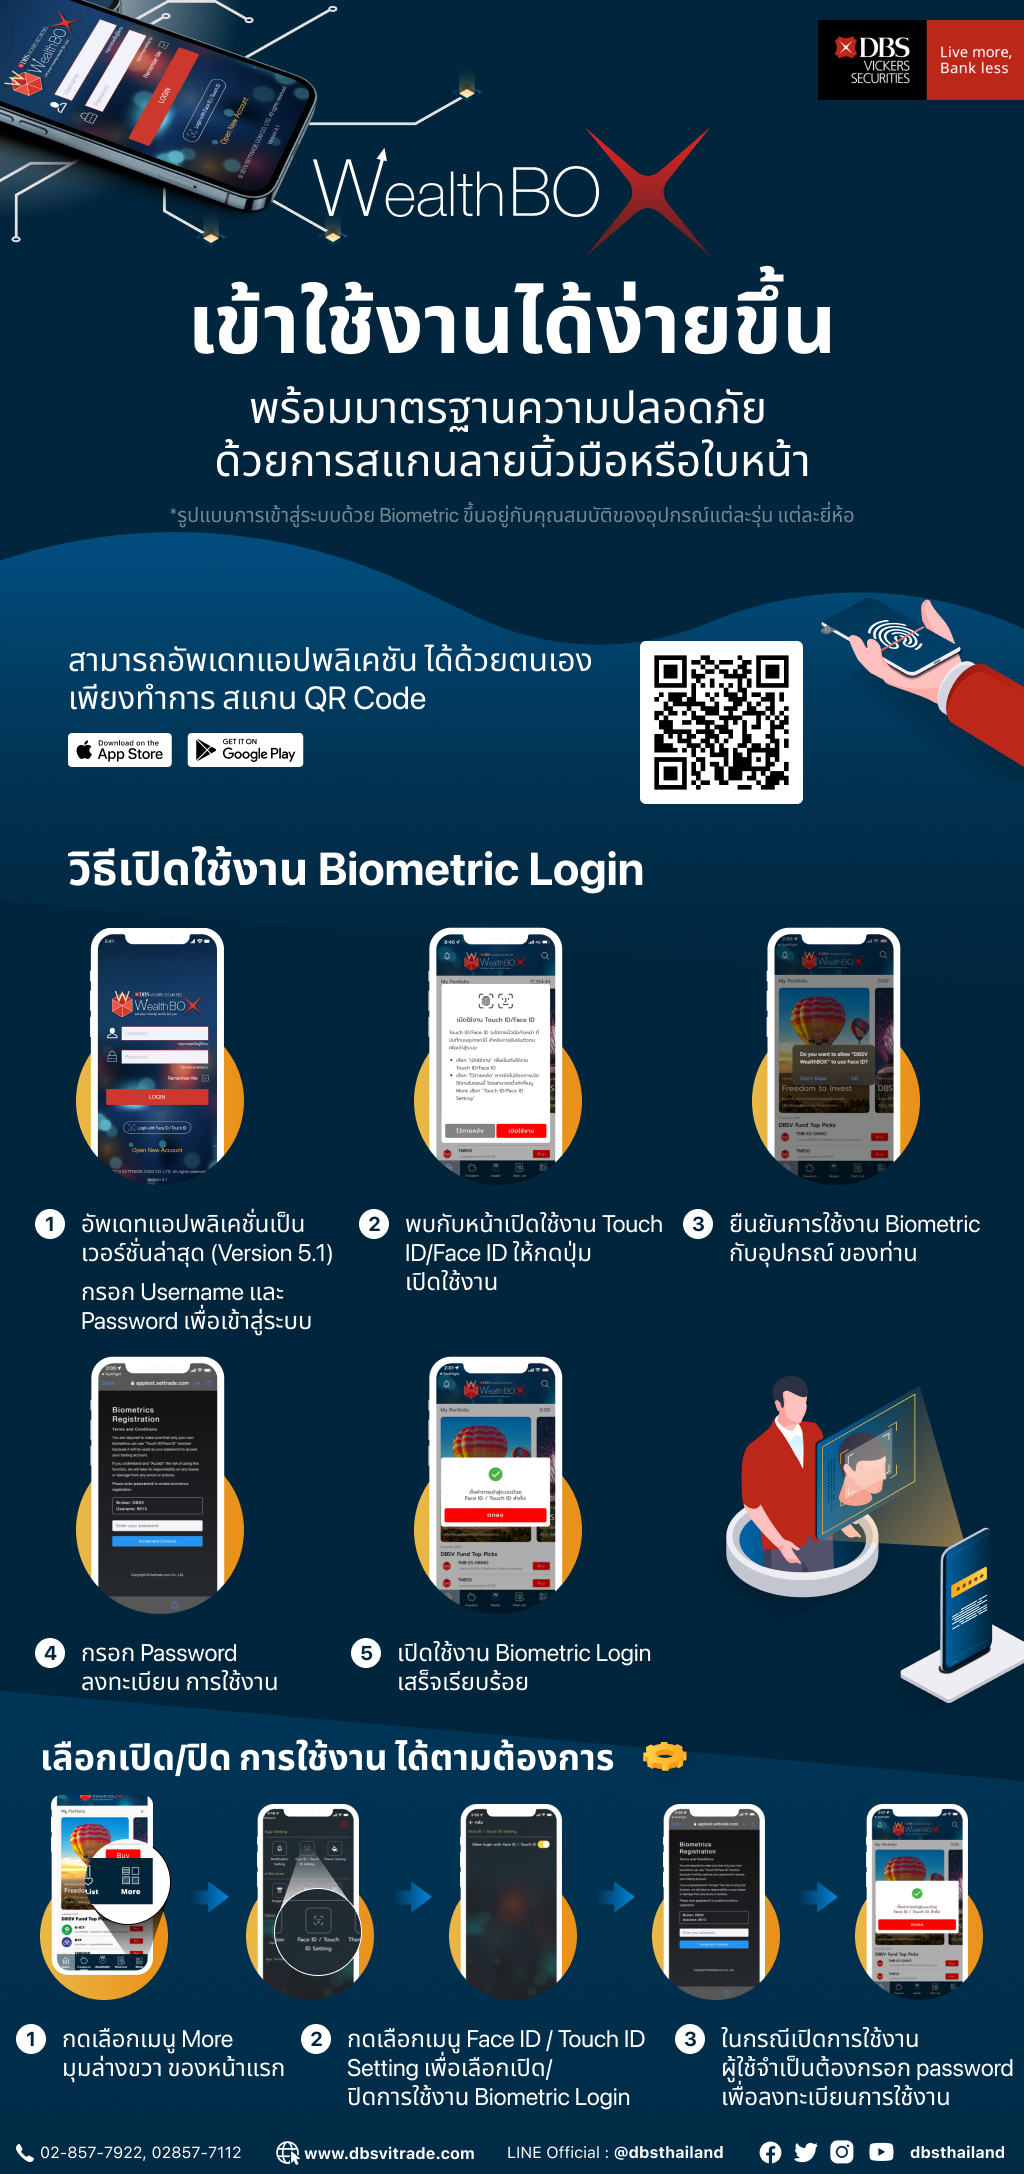 How to Setup Biometric on WealthBOX